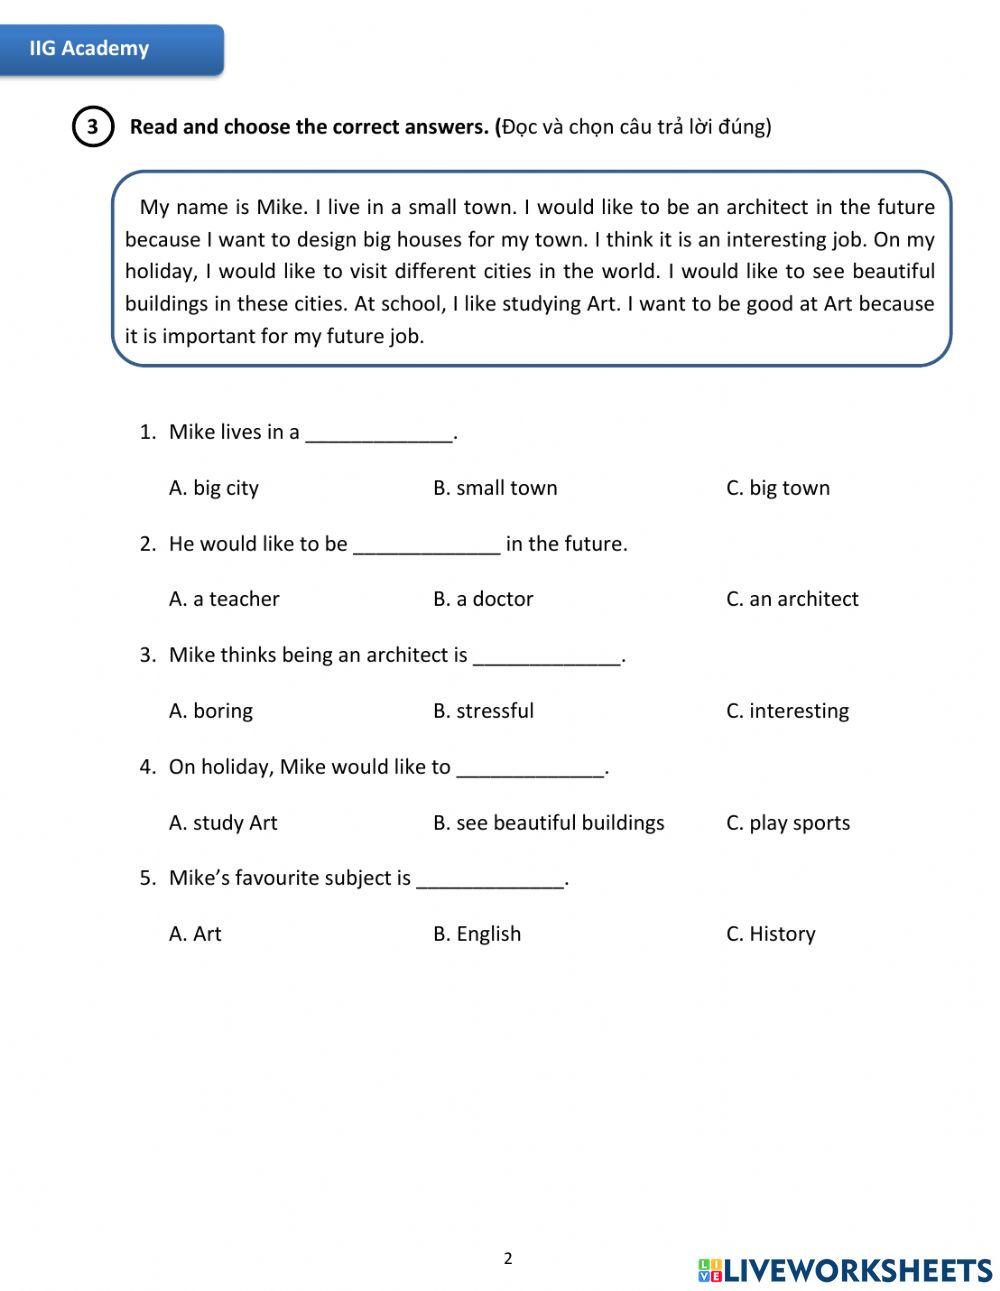 IIG-Grade 5-Worksheet 28